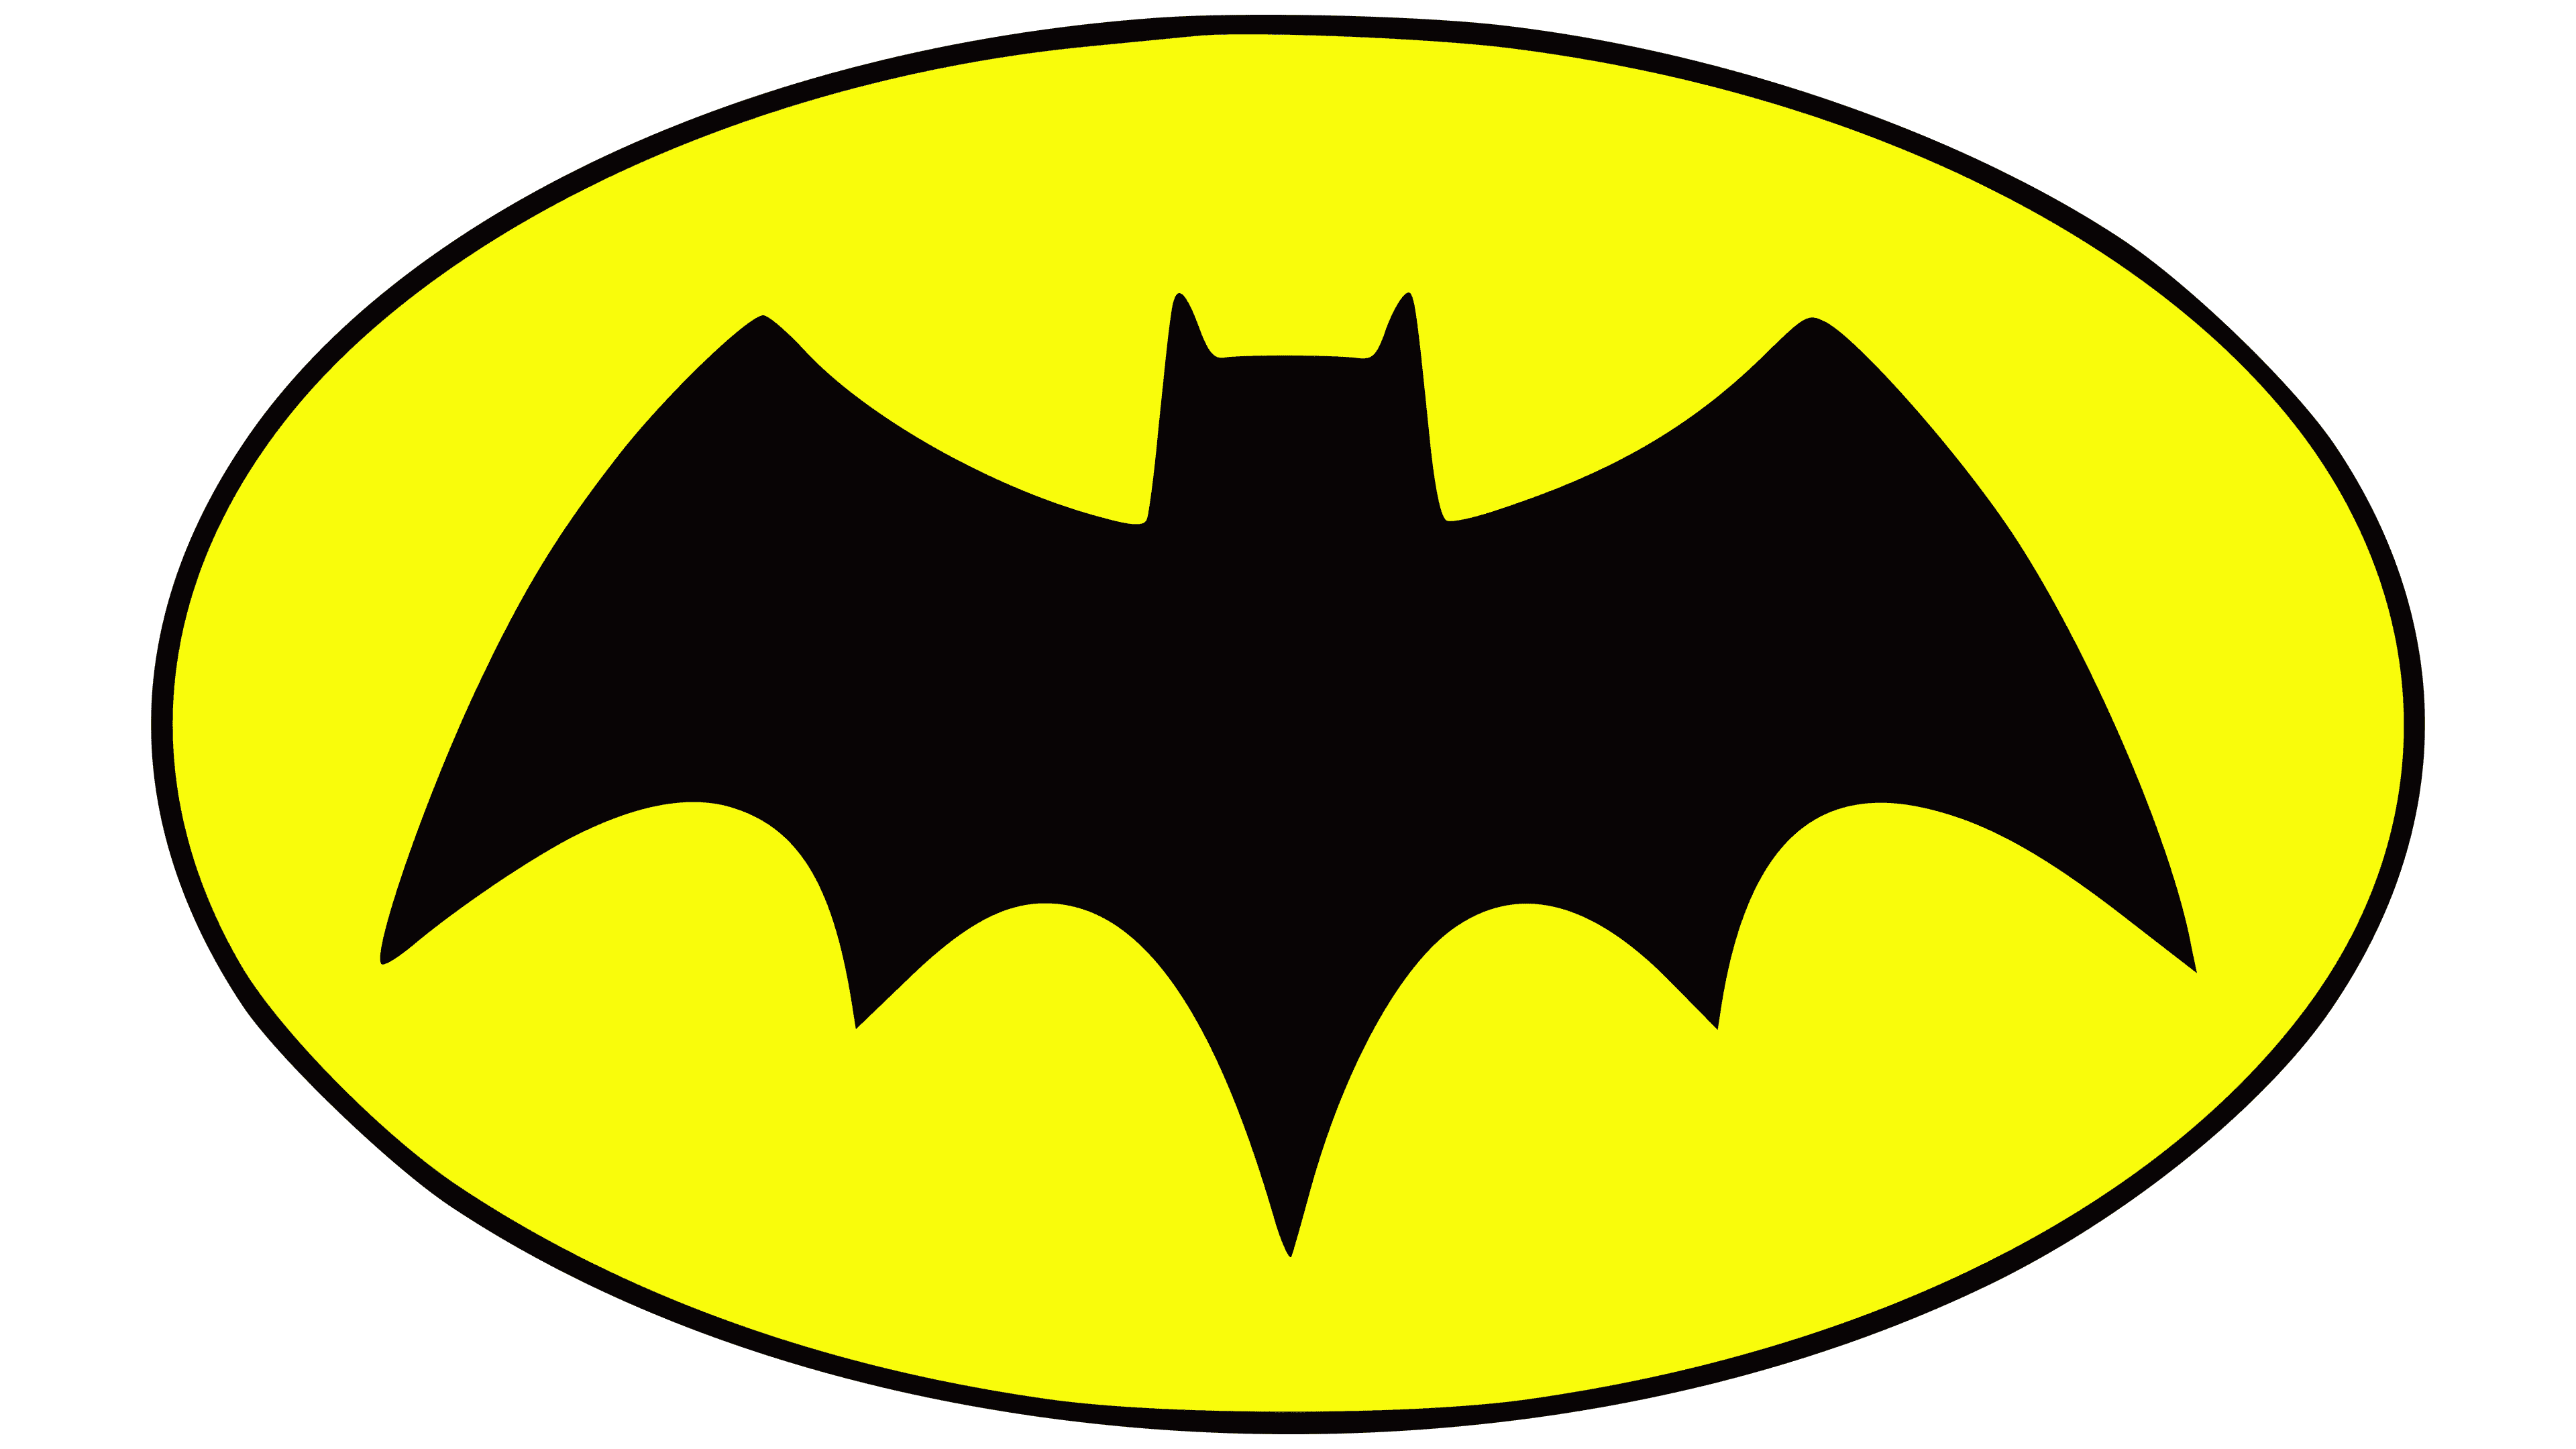 Batman Logo Vector Clipart Free To Use Clip Art Resource Clipart - Riset